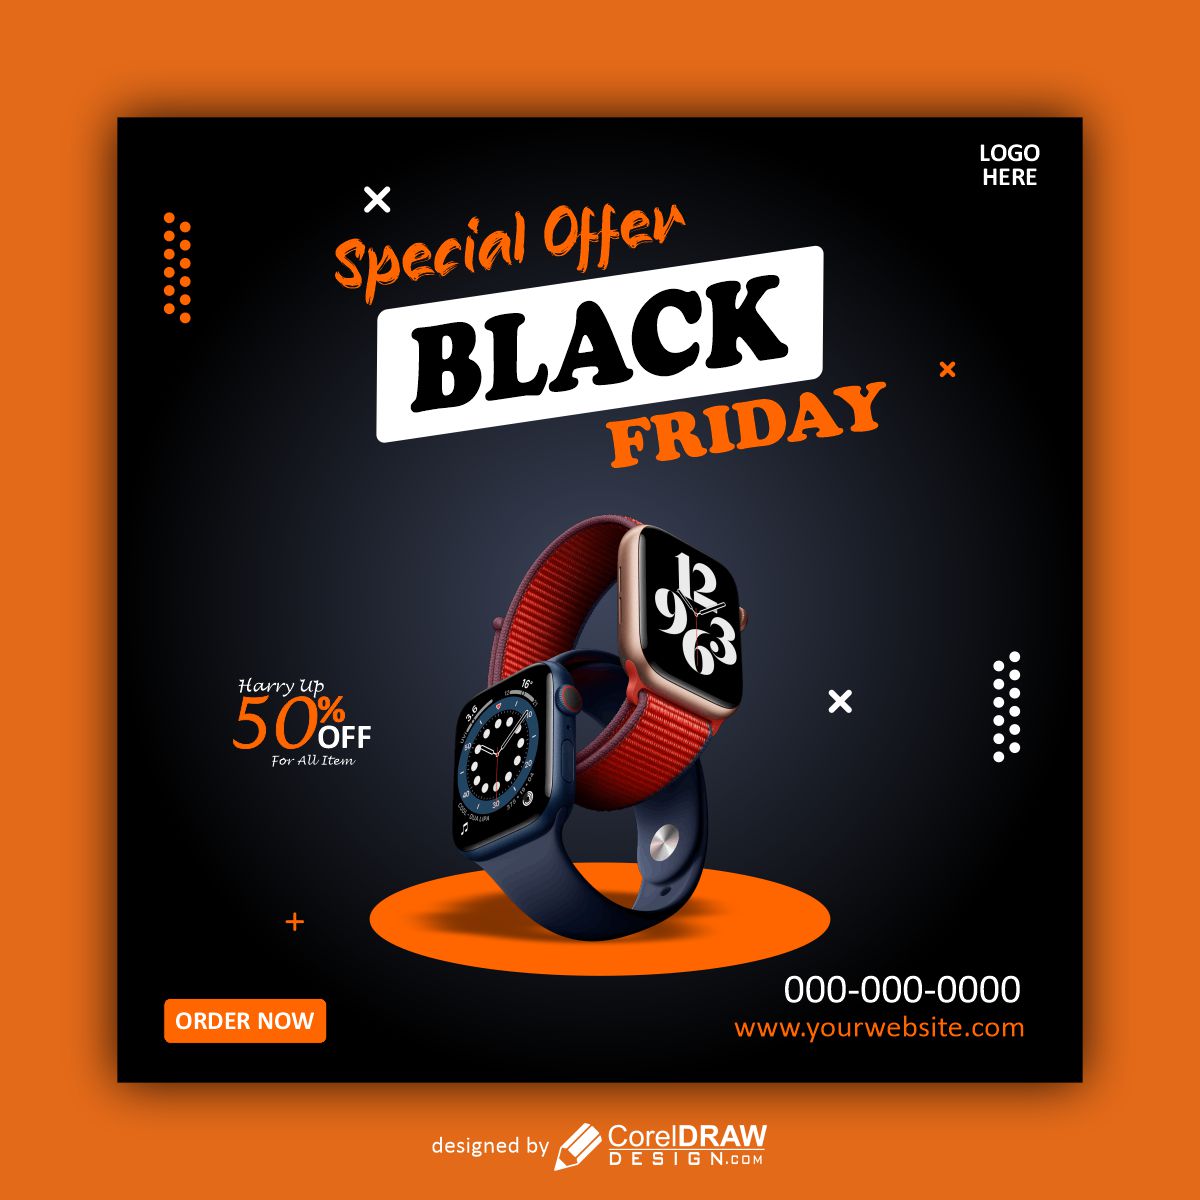 Special offer black friday poster design vector free image